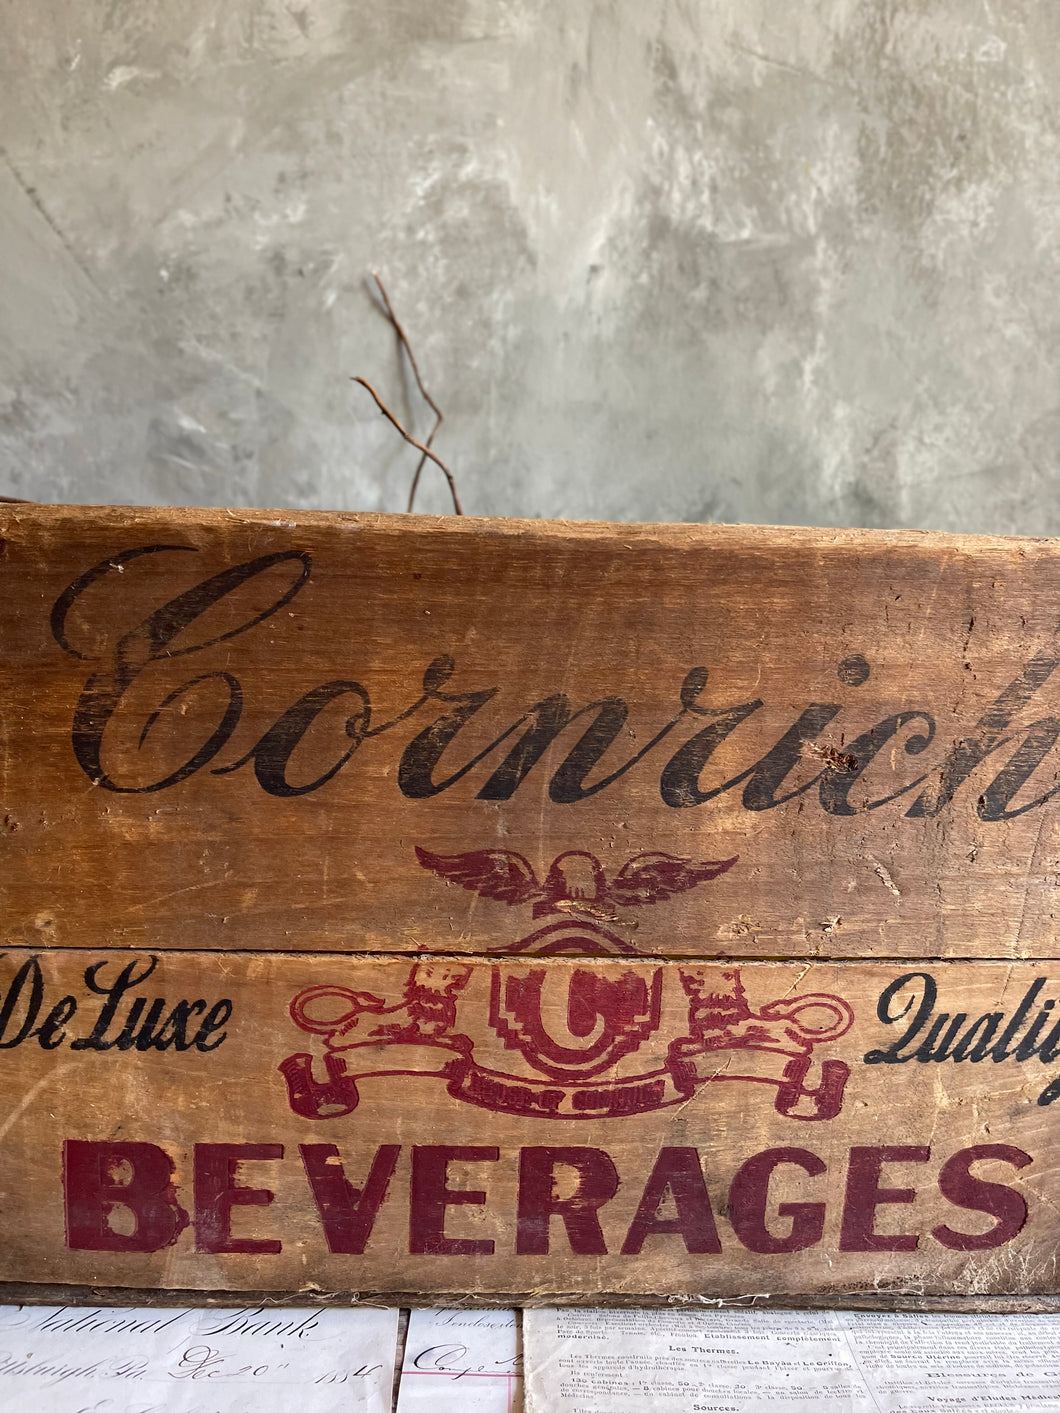 Vintage Cornrich Beverage Crate - New York.